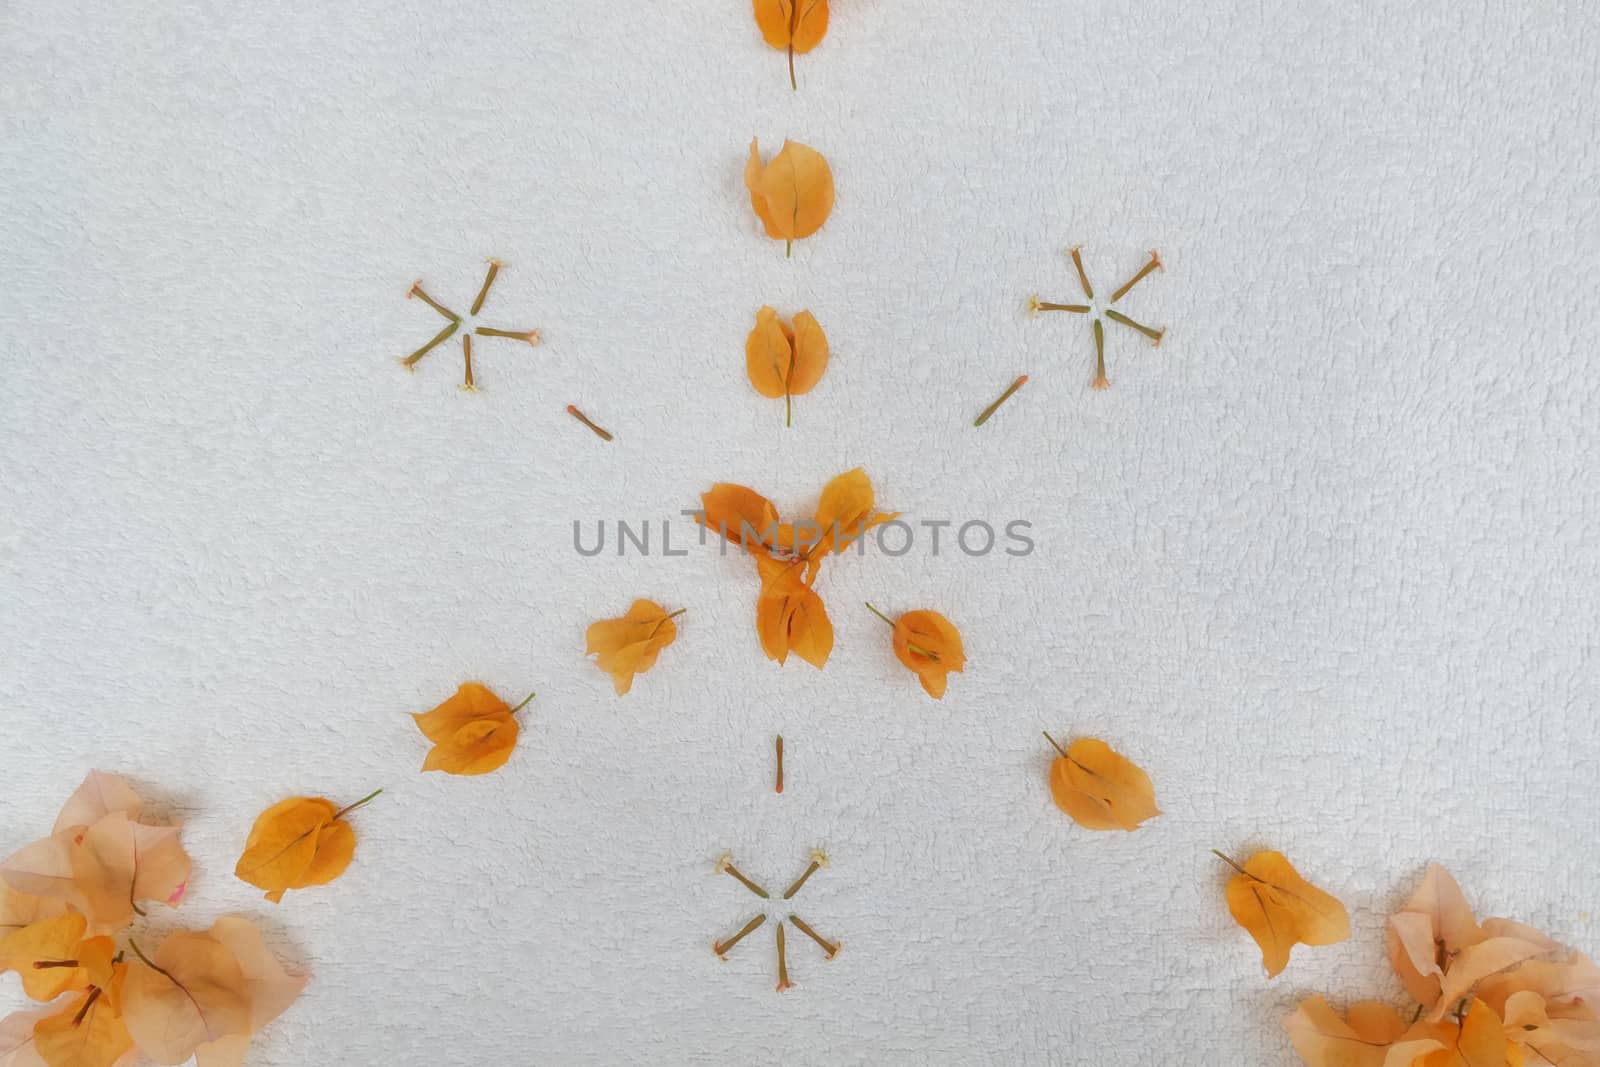 Orange flower petal design by mmm